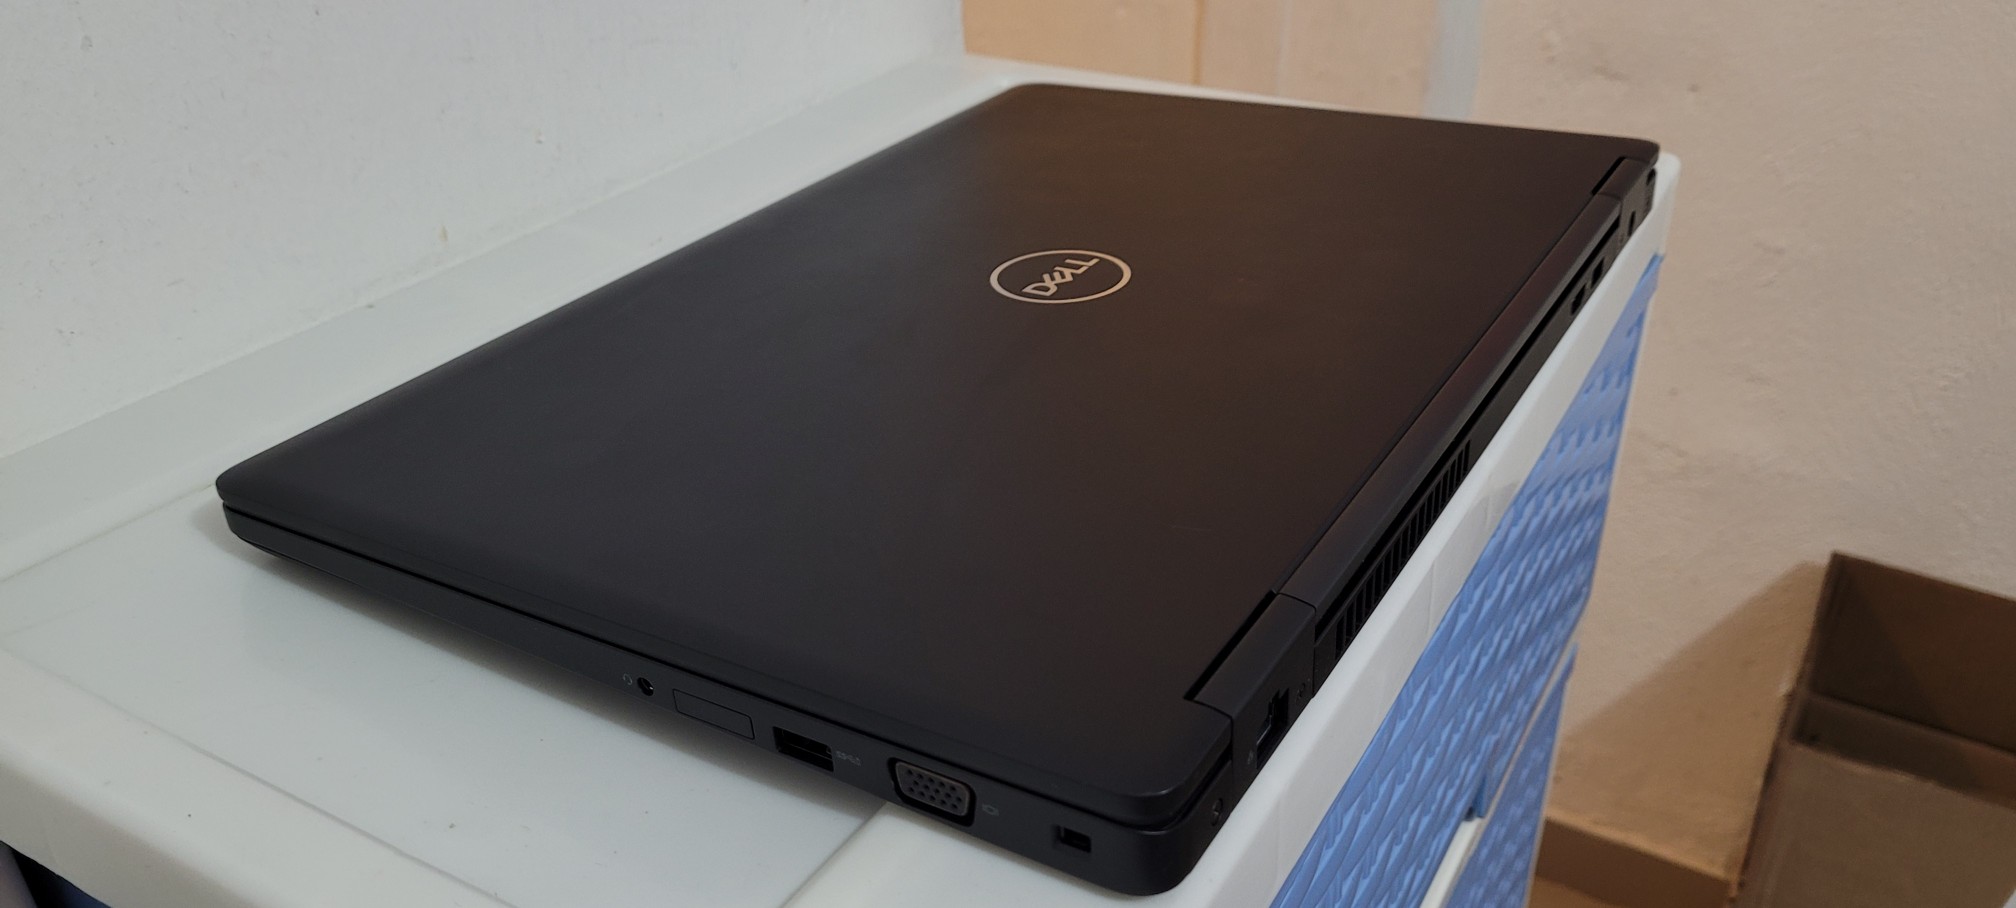 computadoras y laptops - Dell 5570 17 Pulg Core i7 6ta Ram 16gb ddr4 Disco SSD Video intel Y Aty Radeon 2